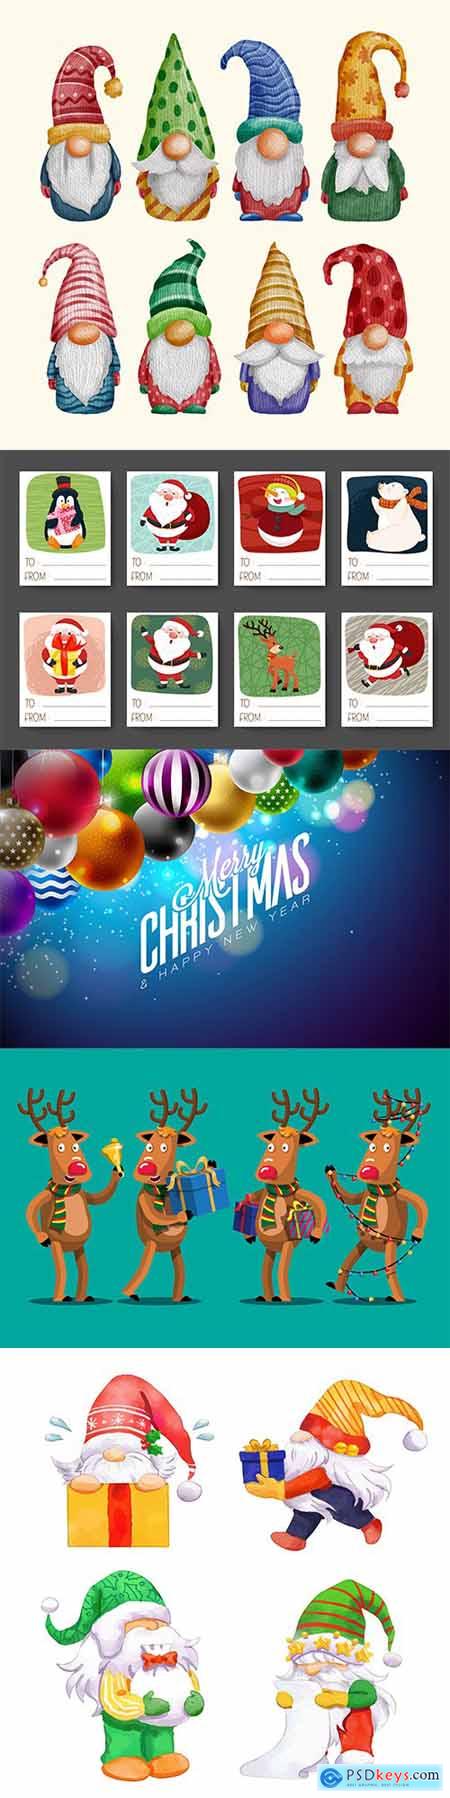 Christmas winter vector collection vol 7